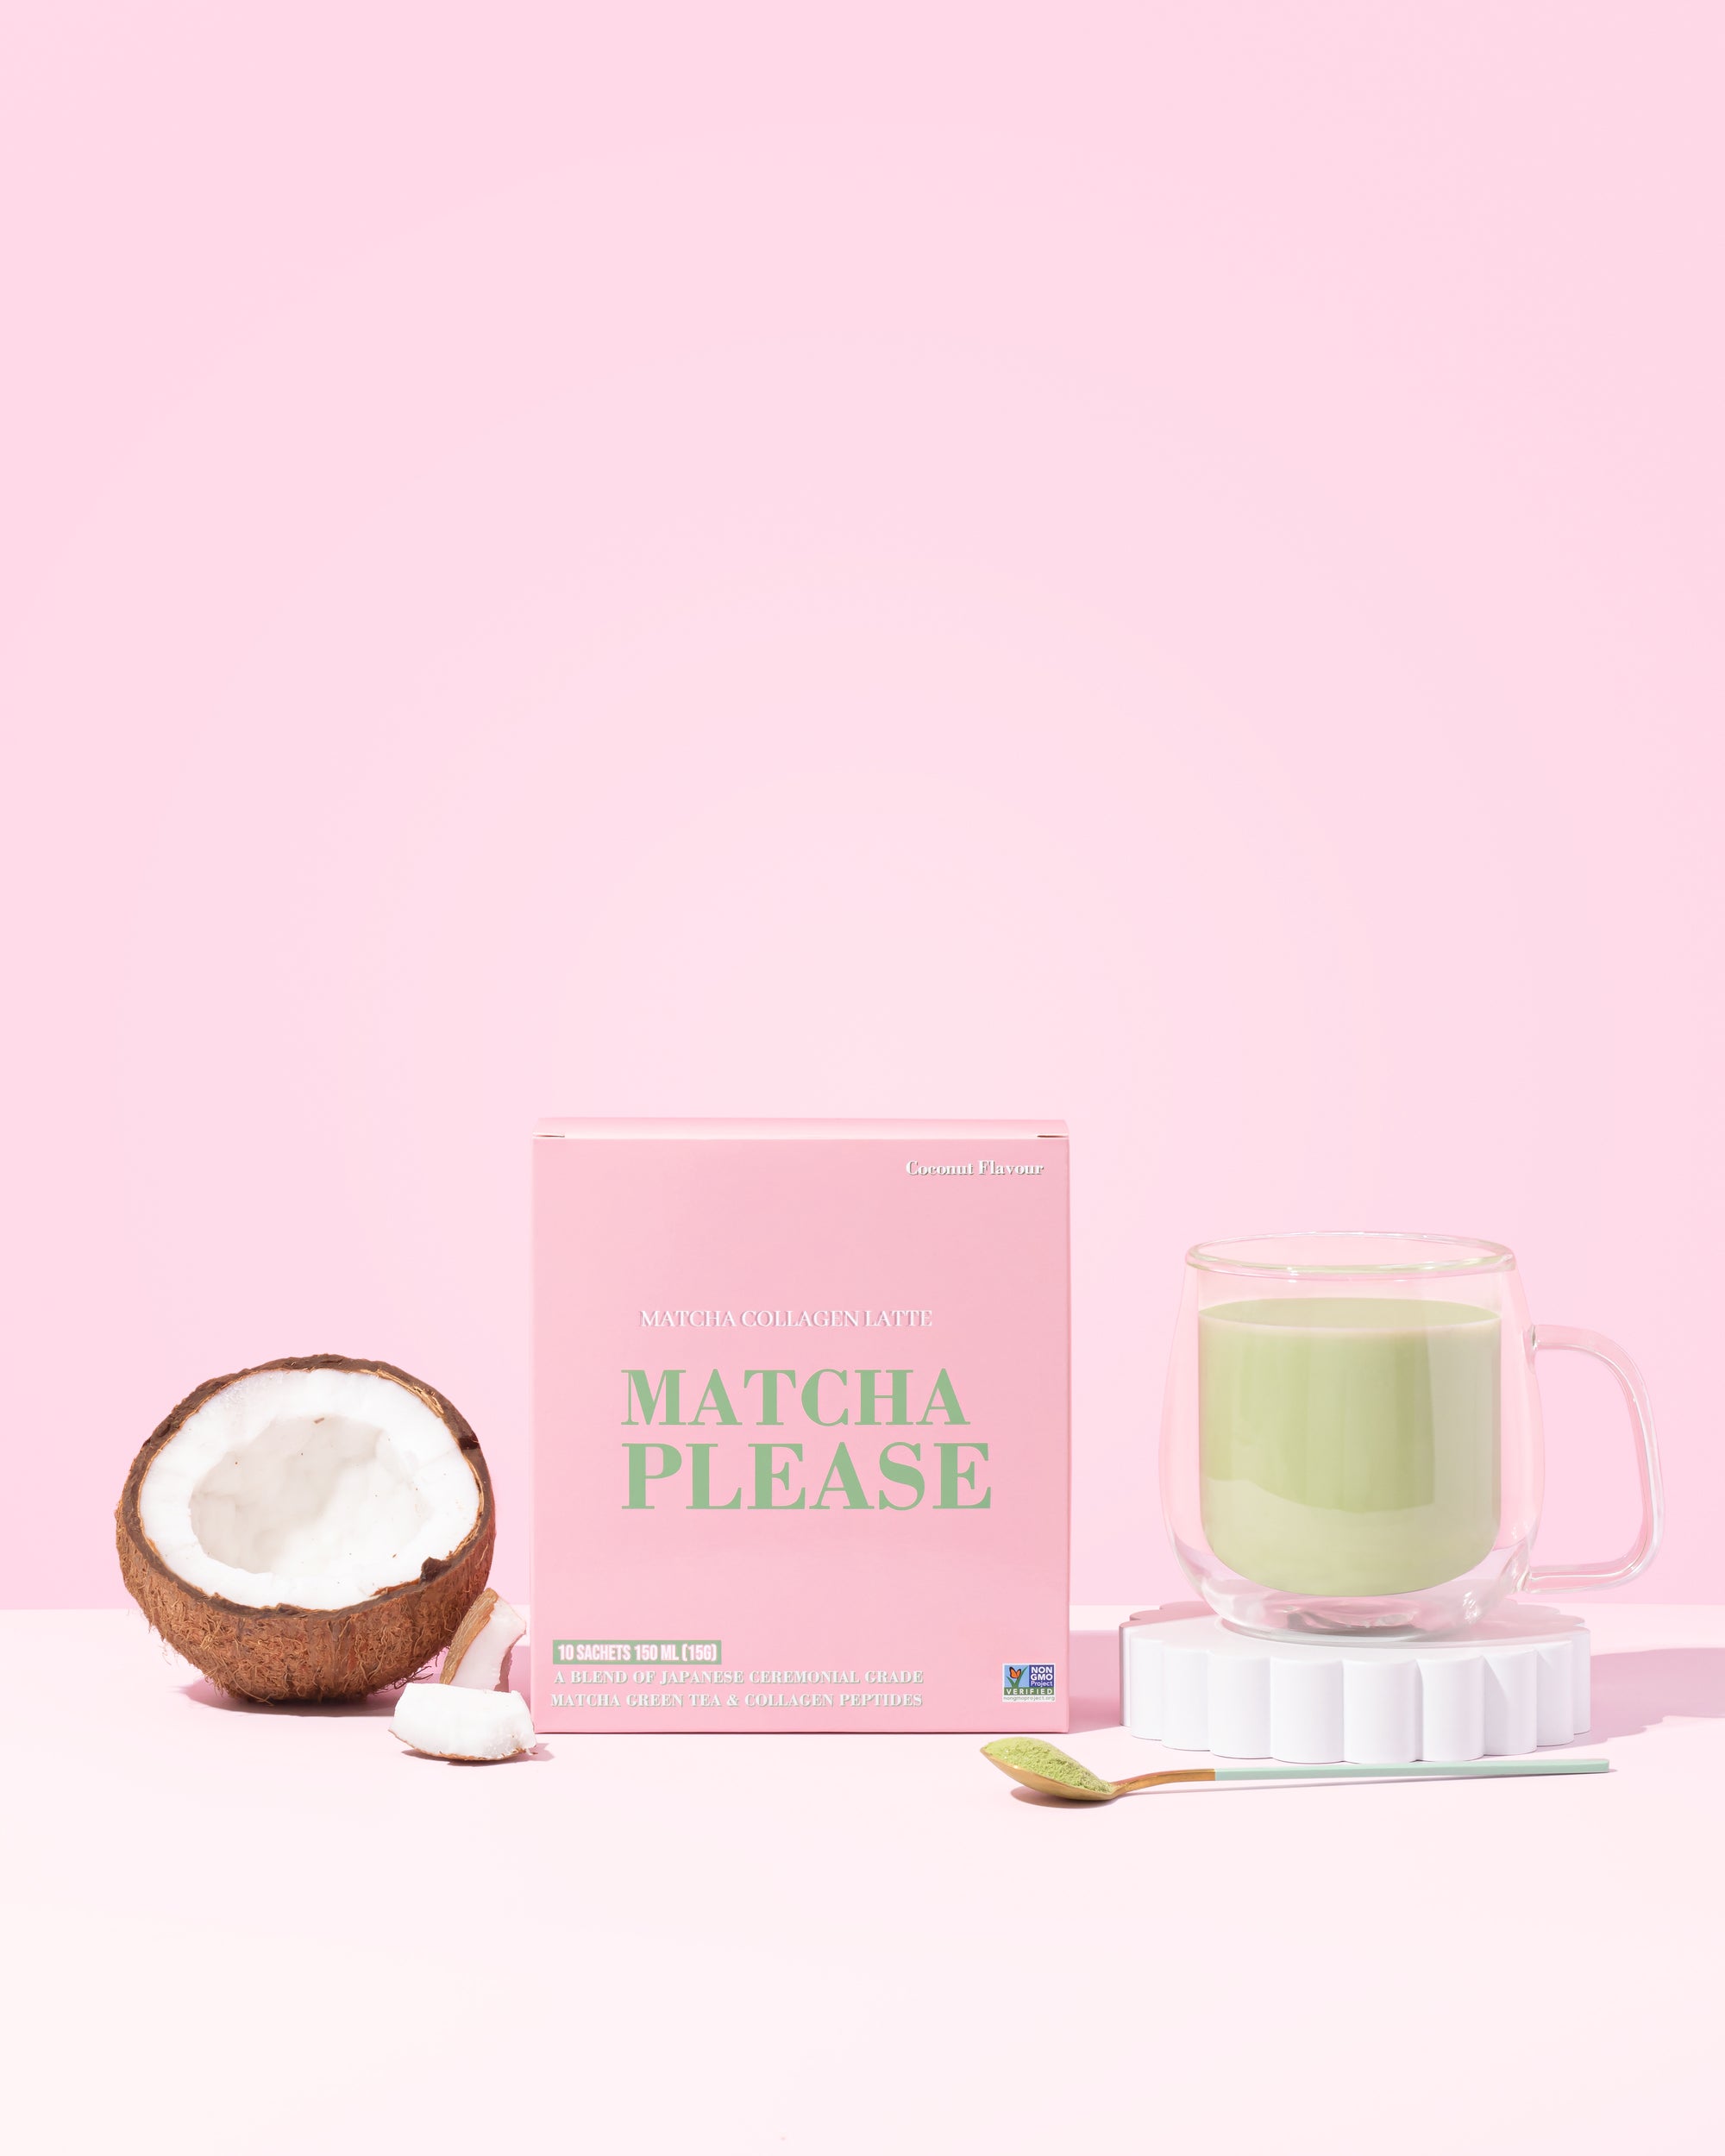 Collagen with magnesium and vanilla flavored matcha tea